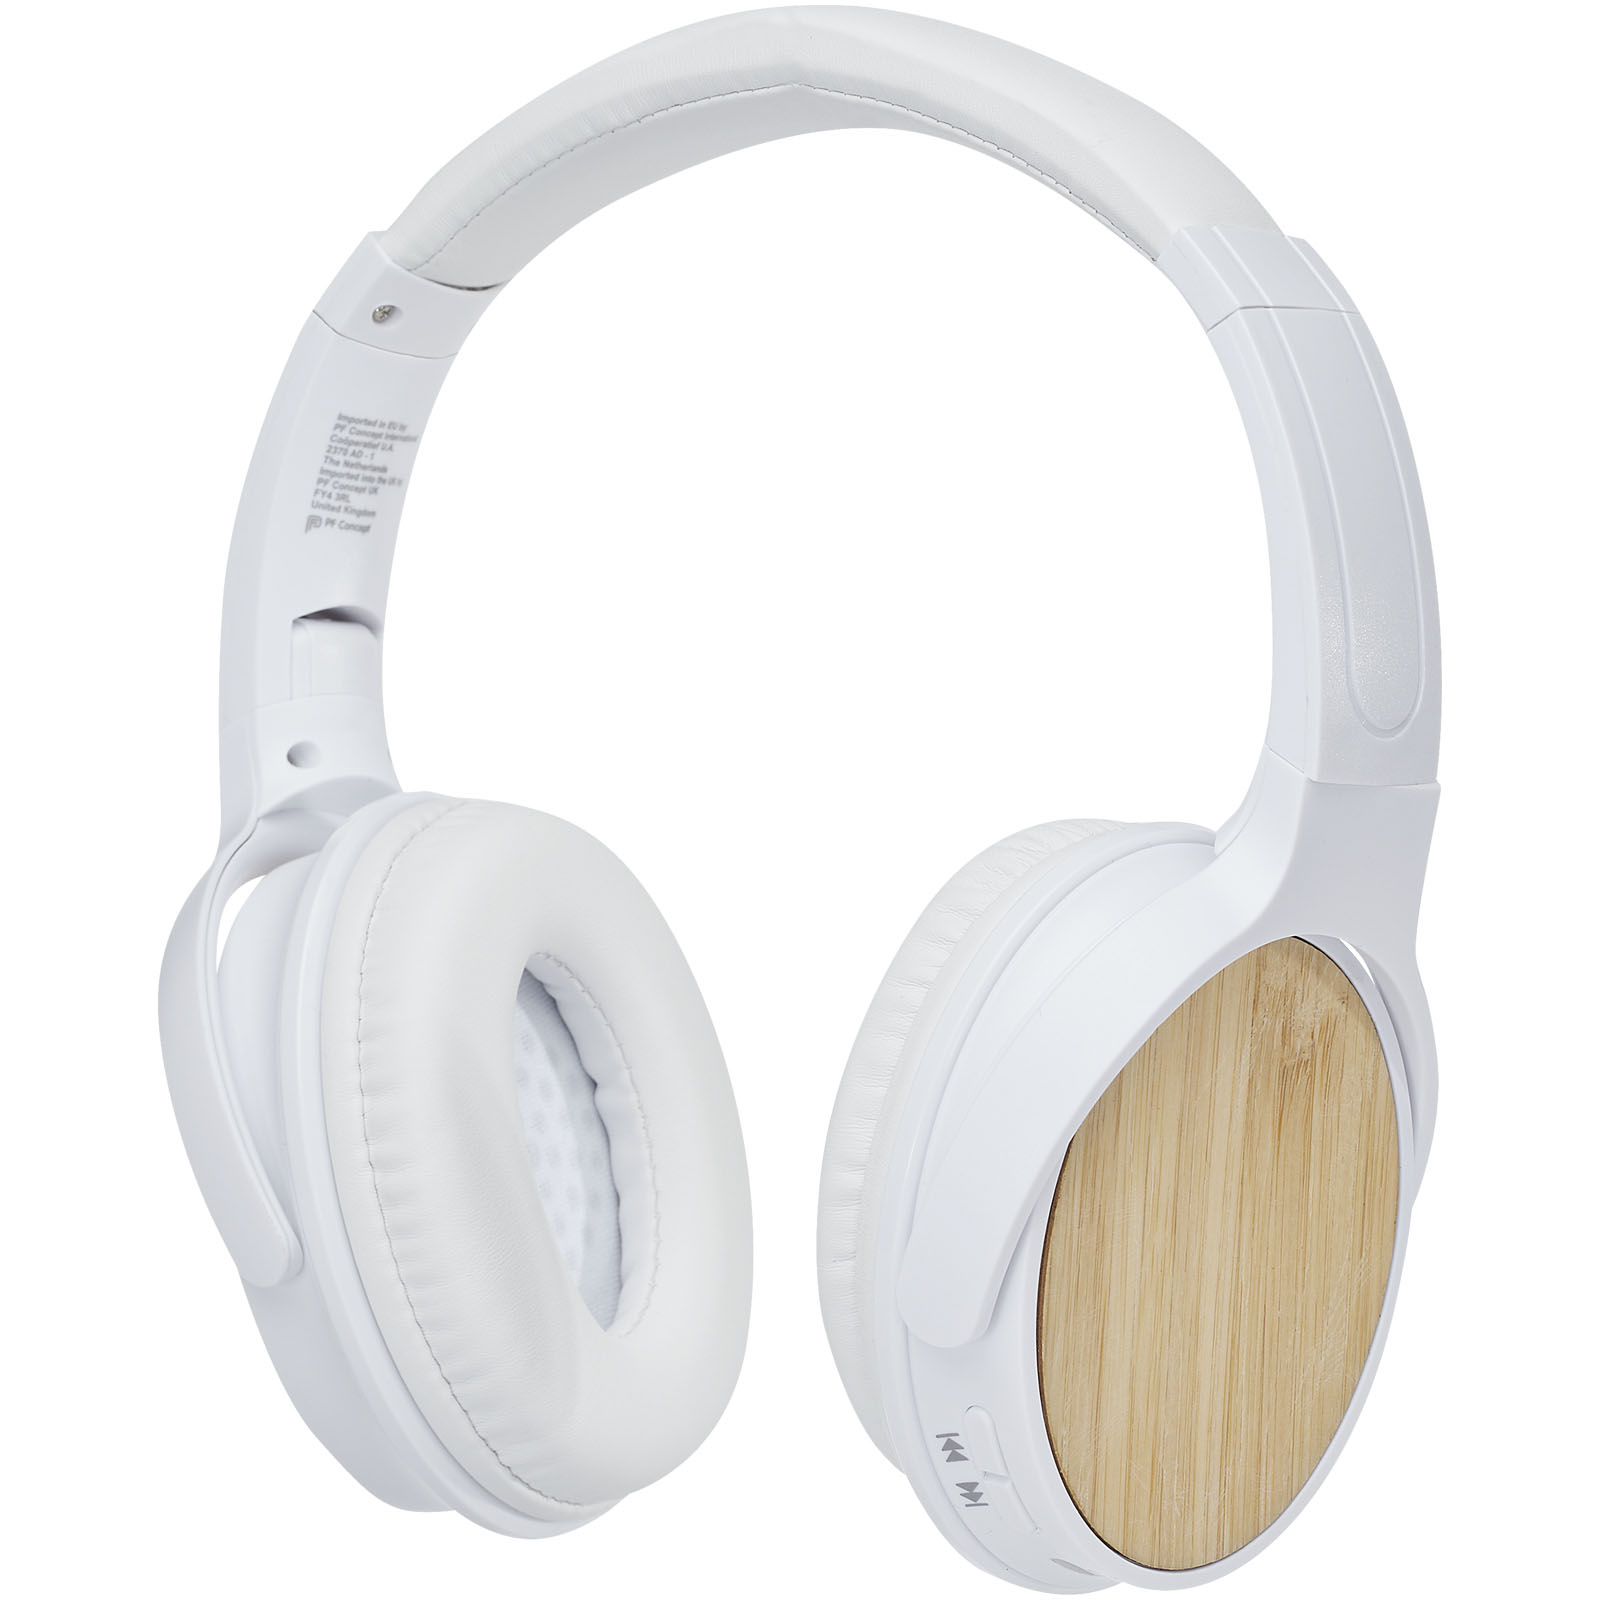 Advertising Headphones - Athos bamboo Bluetooth® headphones with microphone